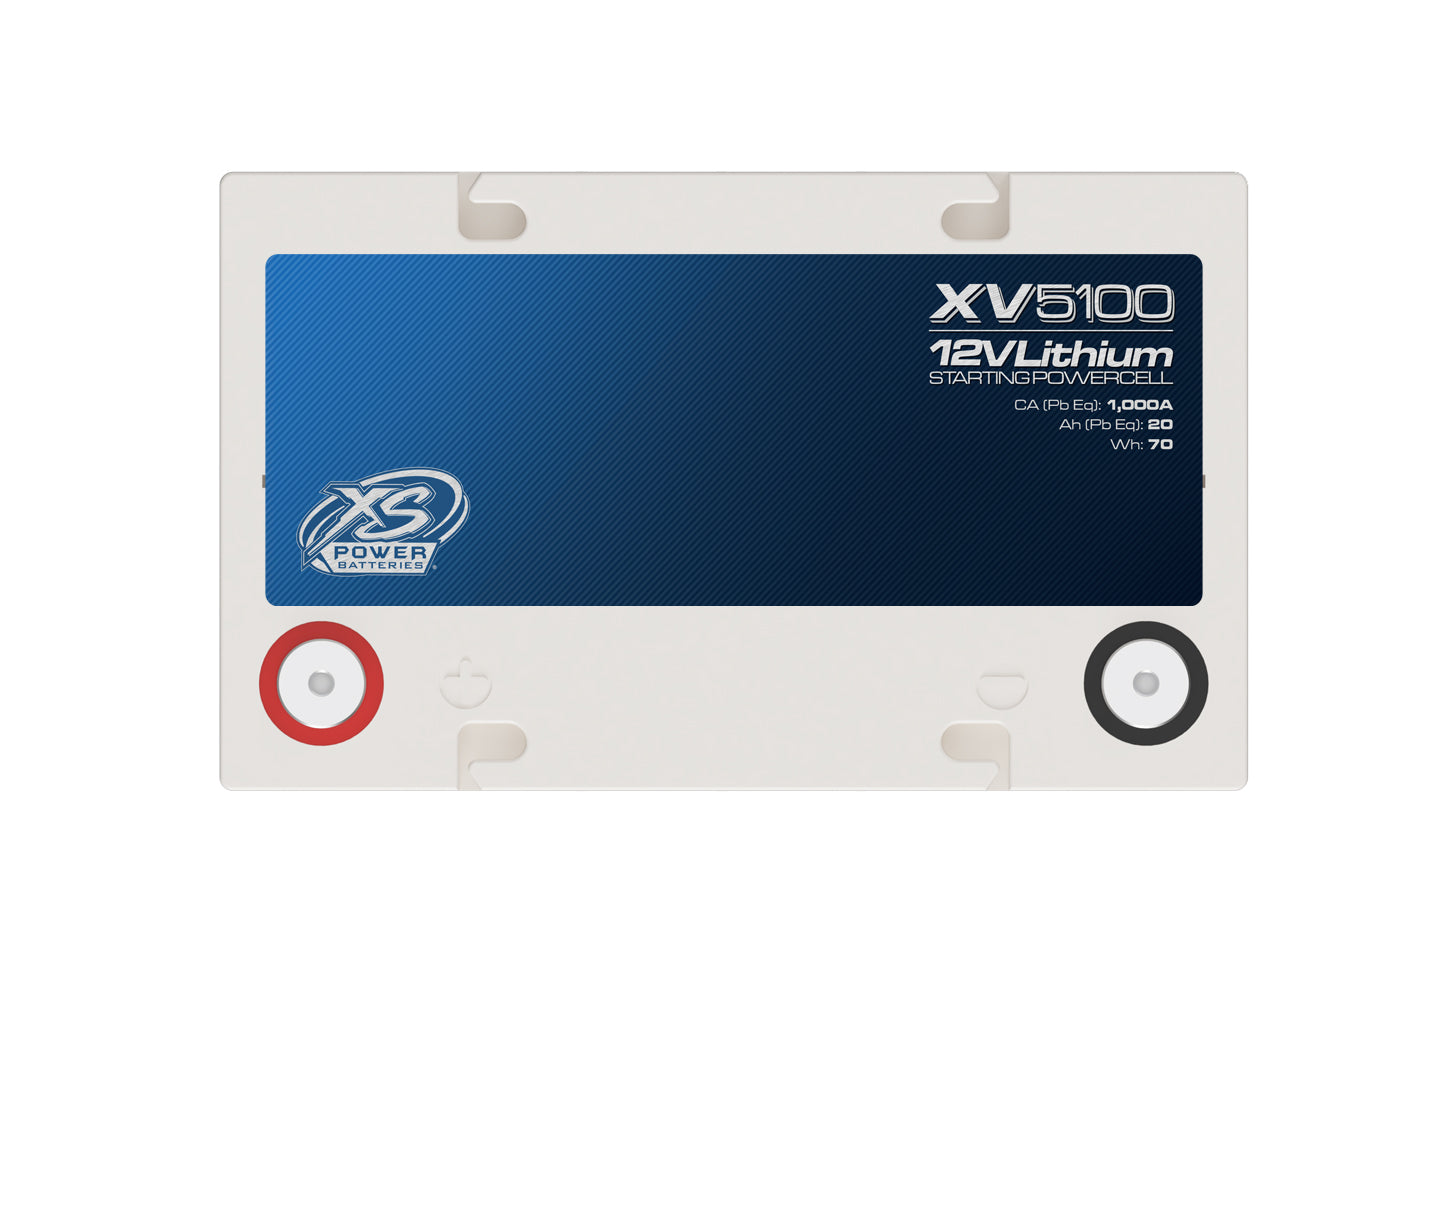 XV5100 XS Power 12VDC Group 51 Lithium LTO Underhood-Safe Vehicle Battery 1500W 70Wh